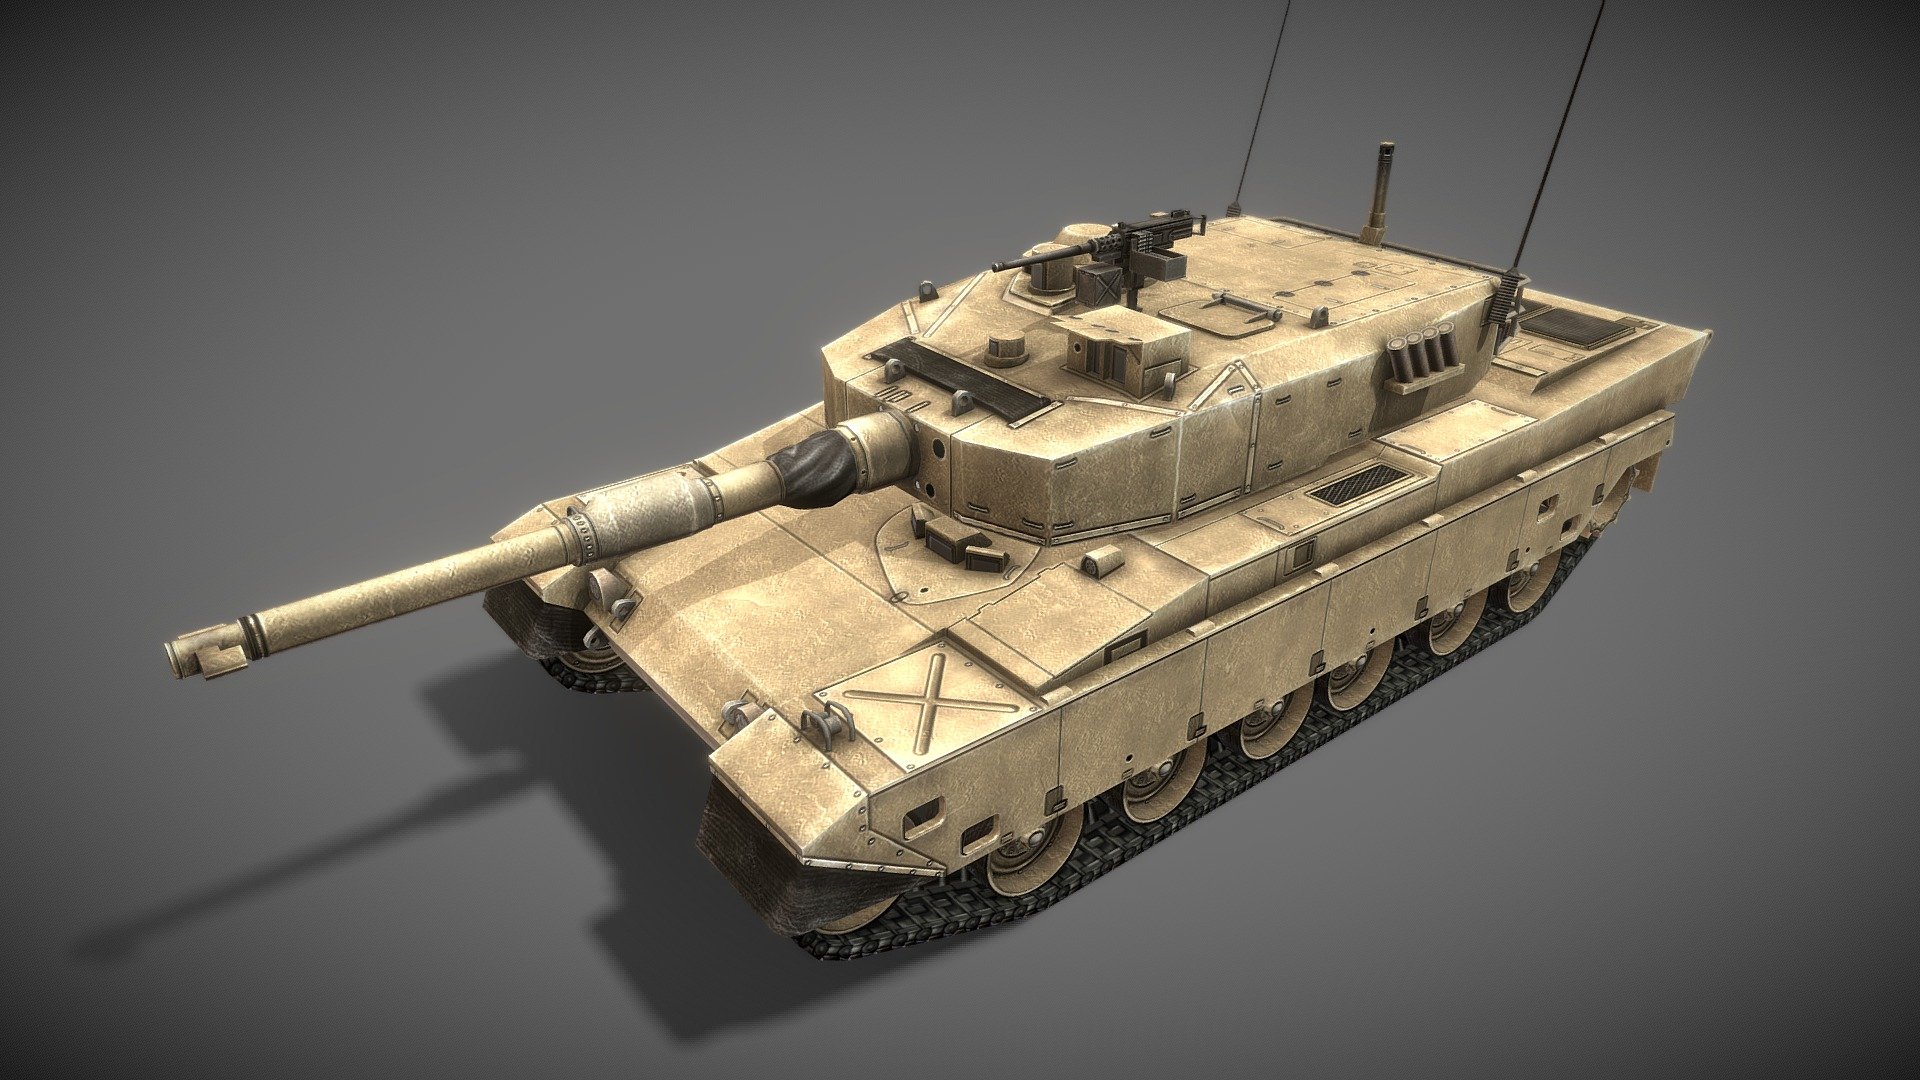 Type 90 Main Battle Tank low poly 3D model.

4799 polys
8495 tris
4885 verts

Textures:
Main texture: 2048x2048 diffuse, specular, normal bump.
Tracks: 256x256 diffuse, specular, normal bump 3d model